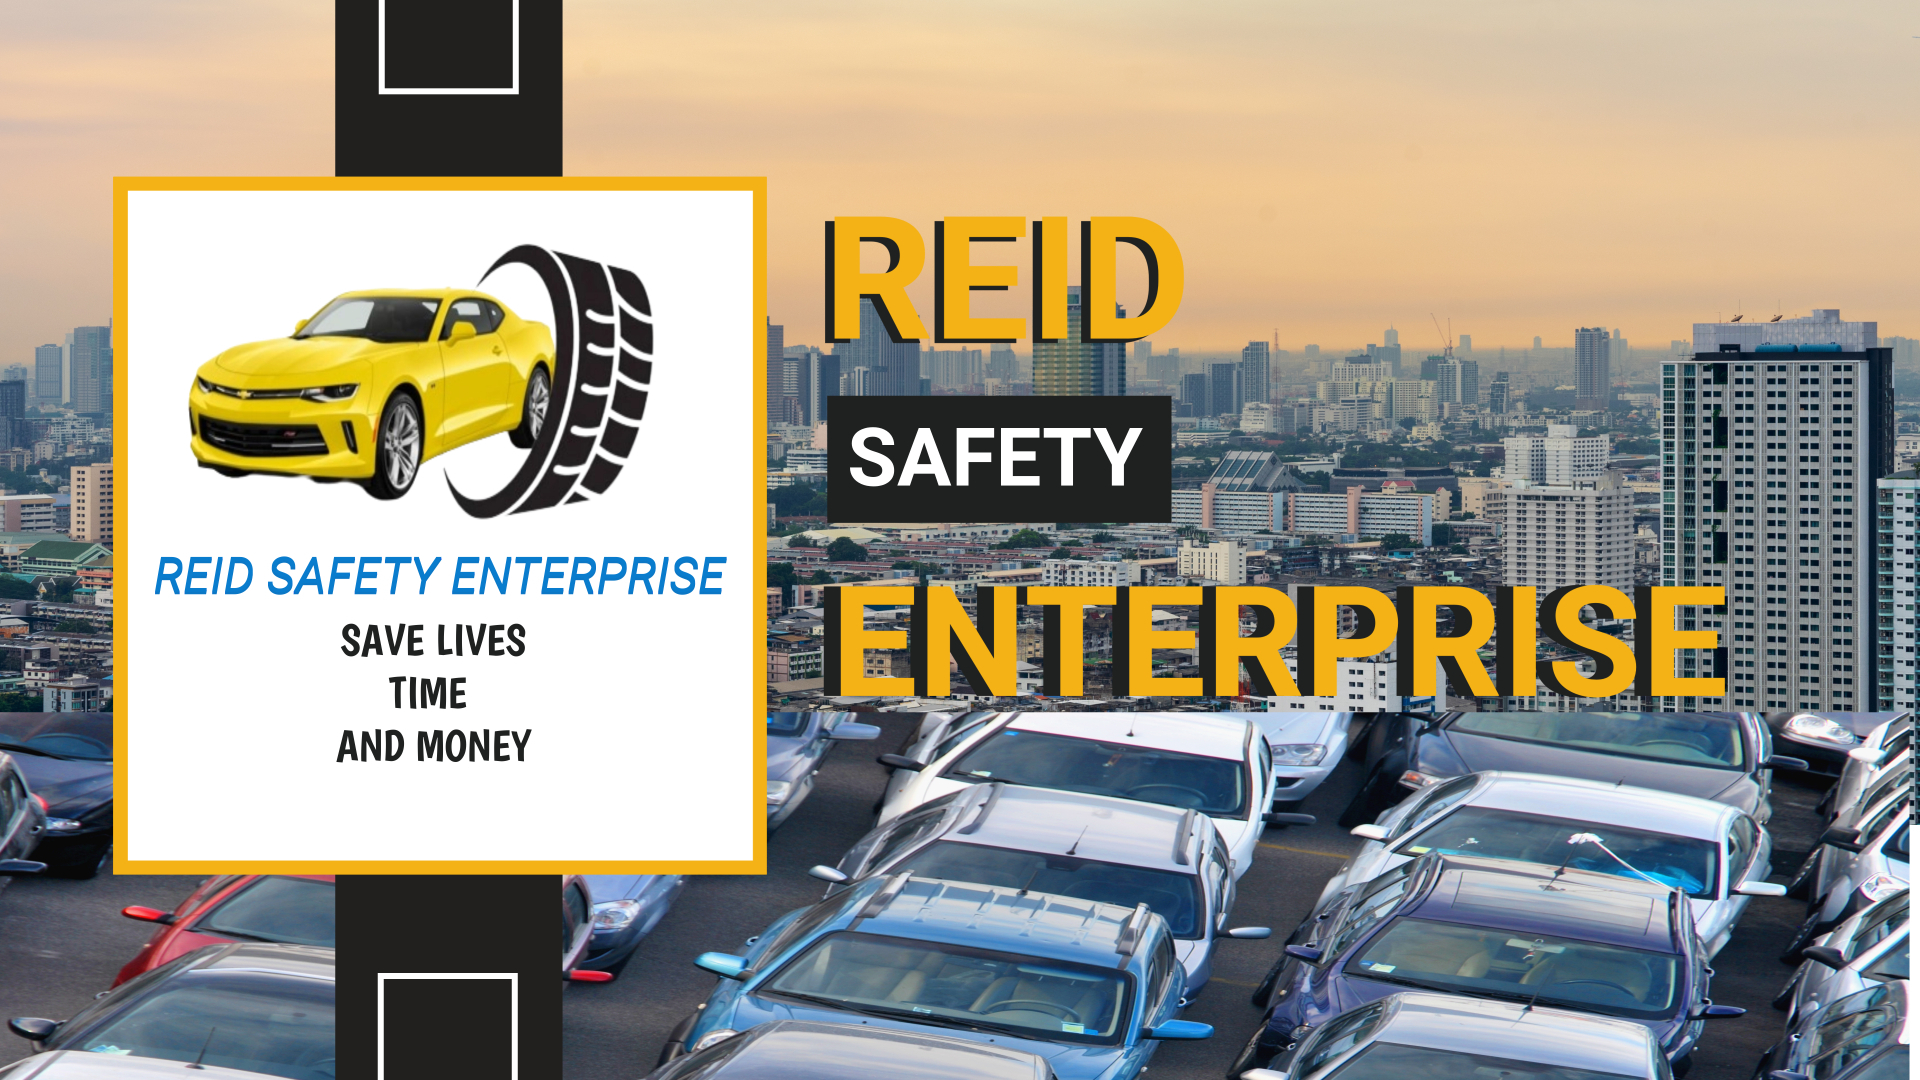 Reid Safety Enterprise